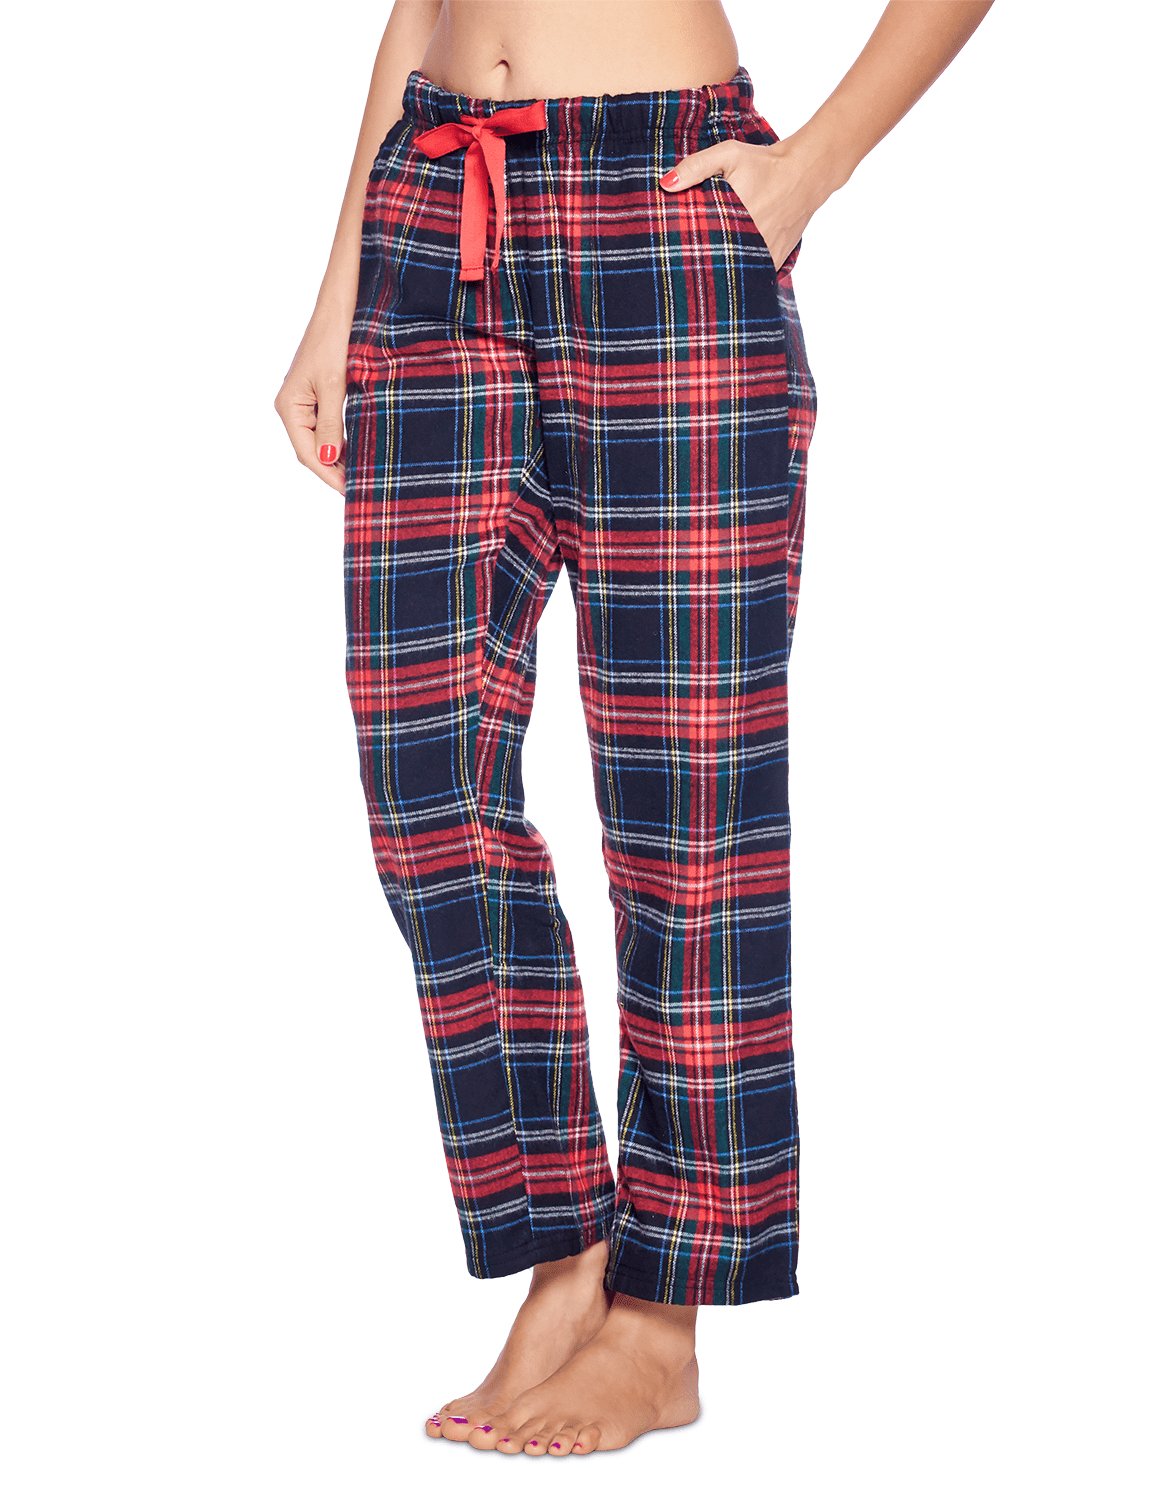 Ashford & Brooks Womens 2 Pack Super Soft Flannel Plaid Pajama Sleepwear Pants 